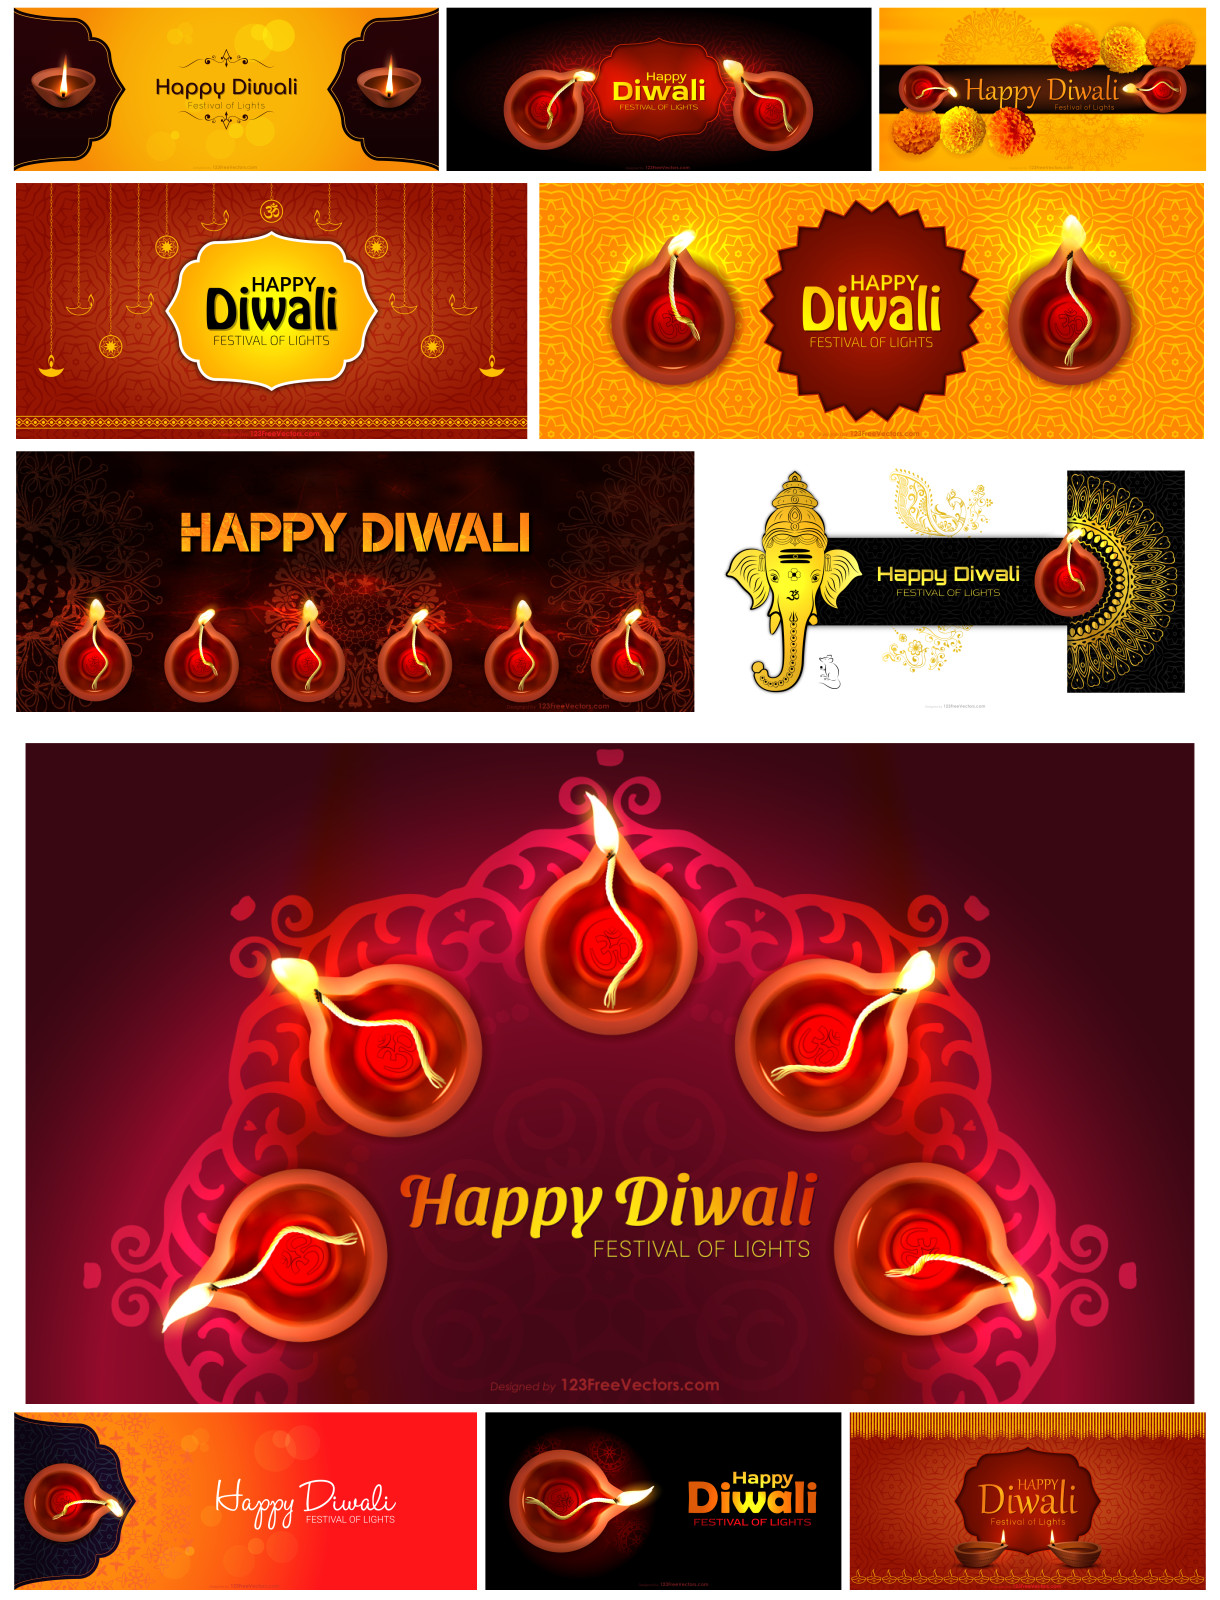 Dazzle Your Diwali: 11 Free Banner Designs to Illuminate Your Festival